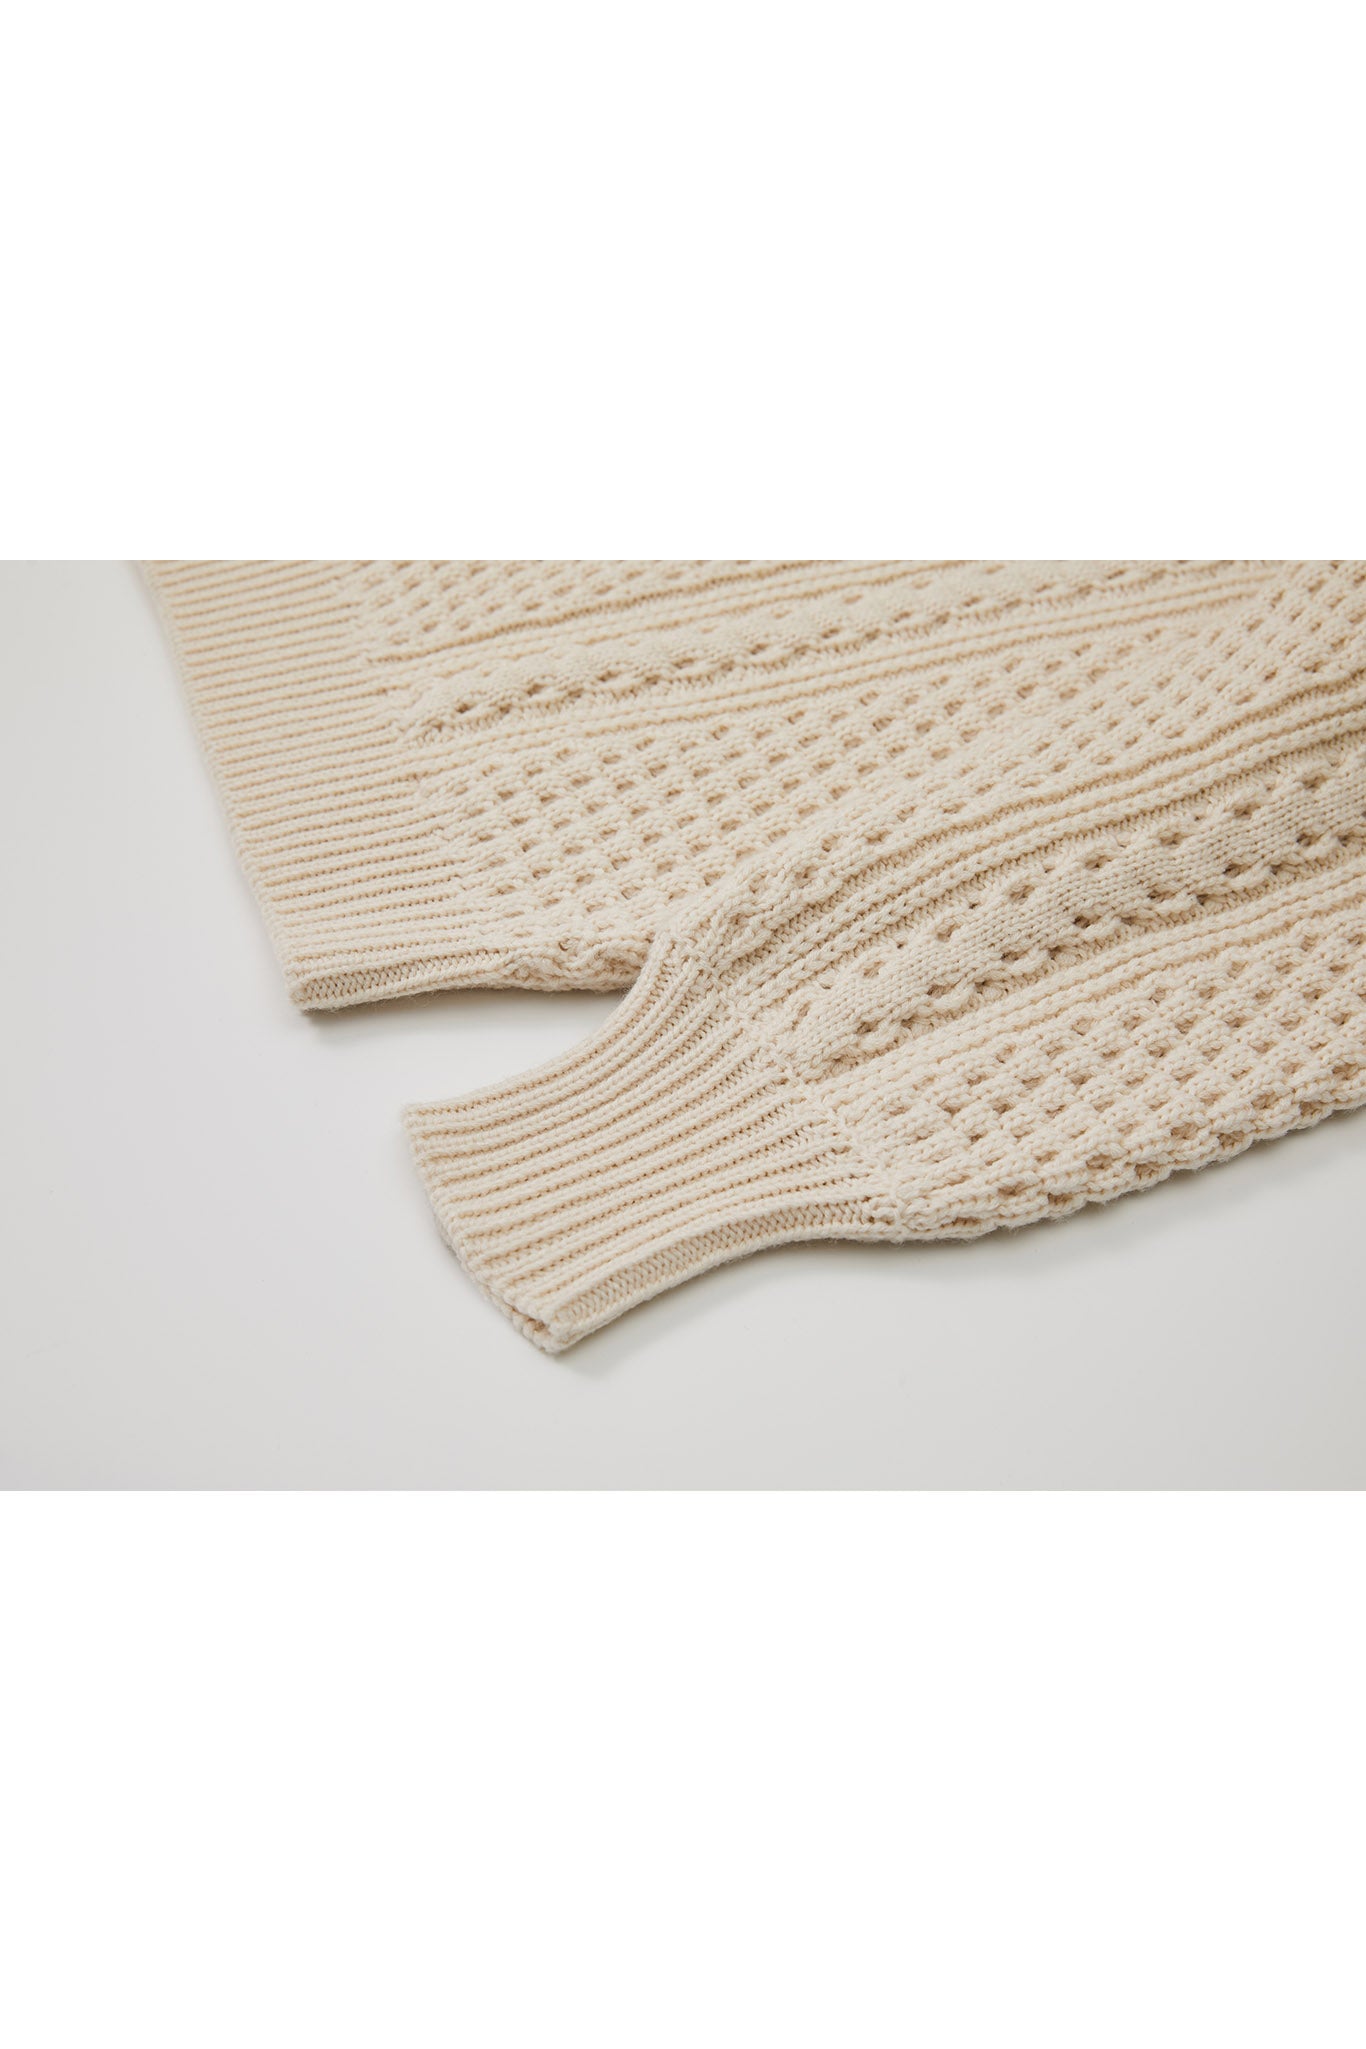 [tageechita] Crew neck design knit tops